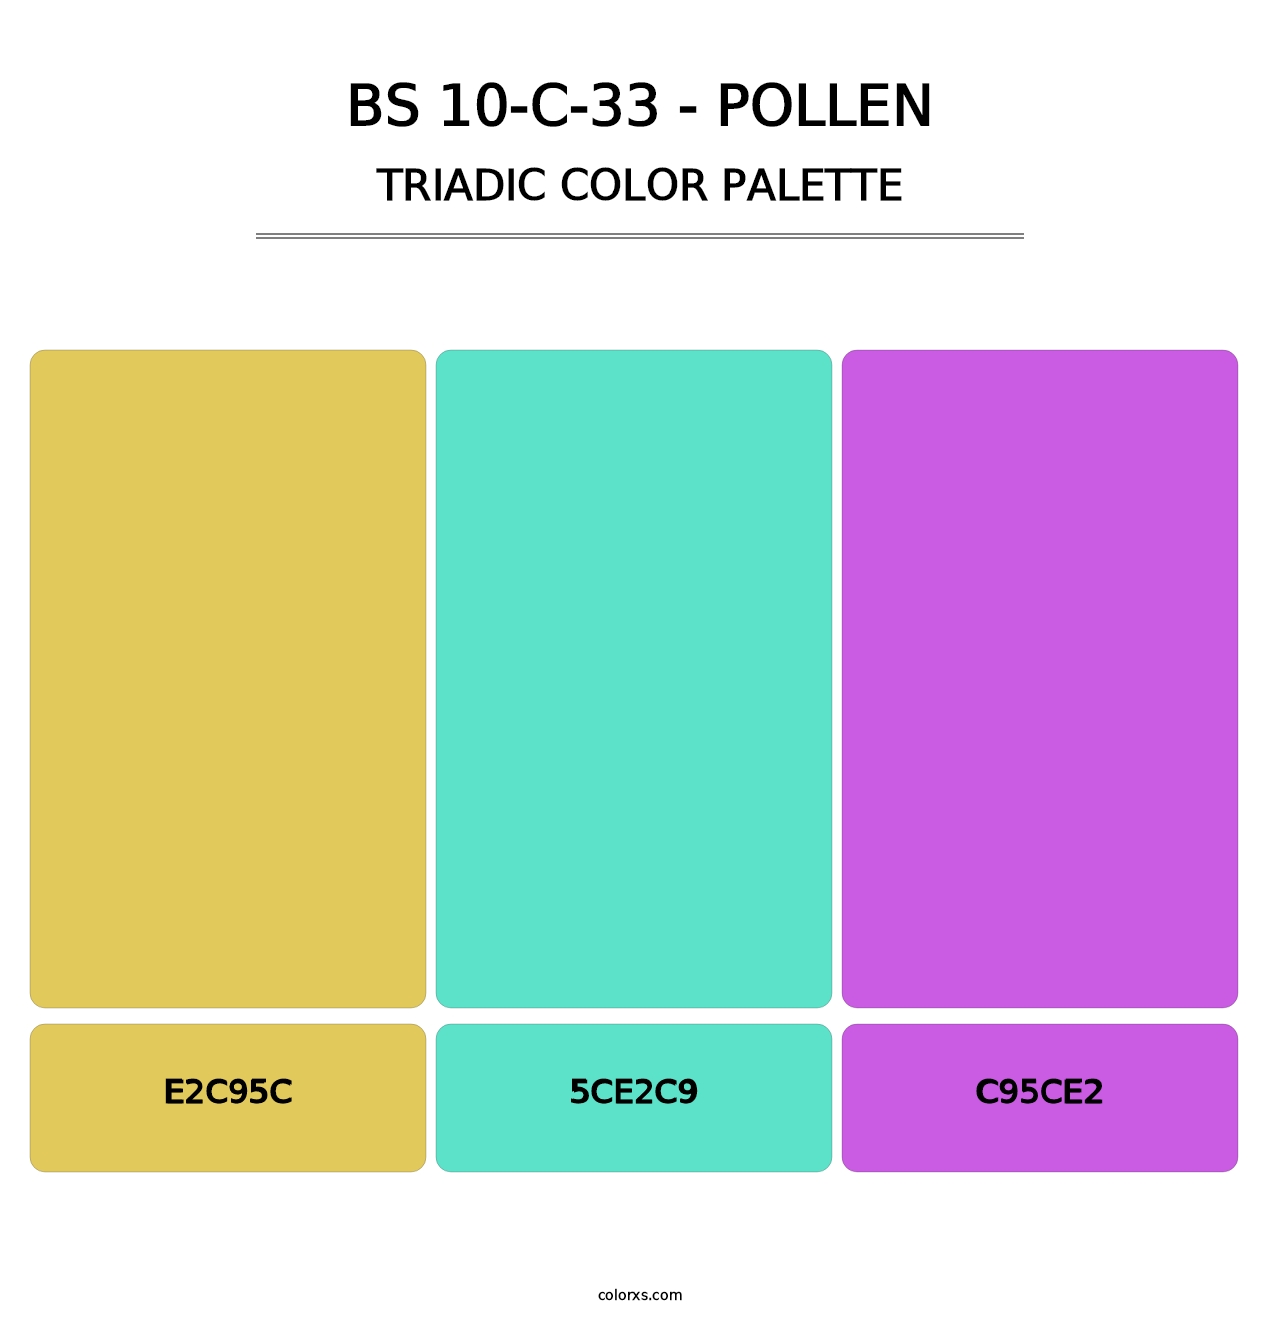 BS 10-C-33 - Pollen - Triadic Color Palette